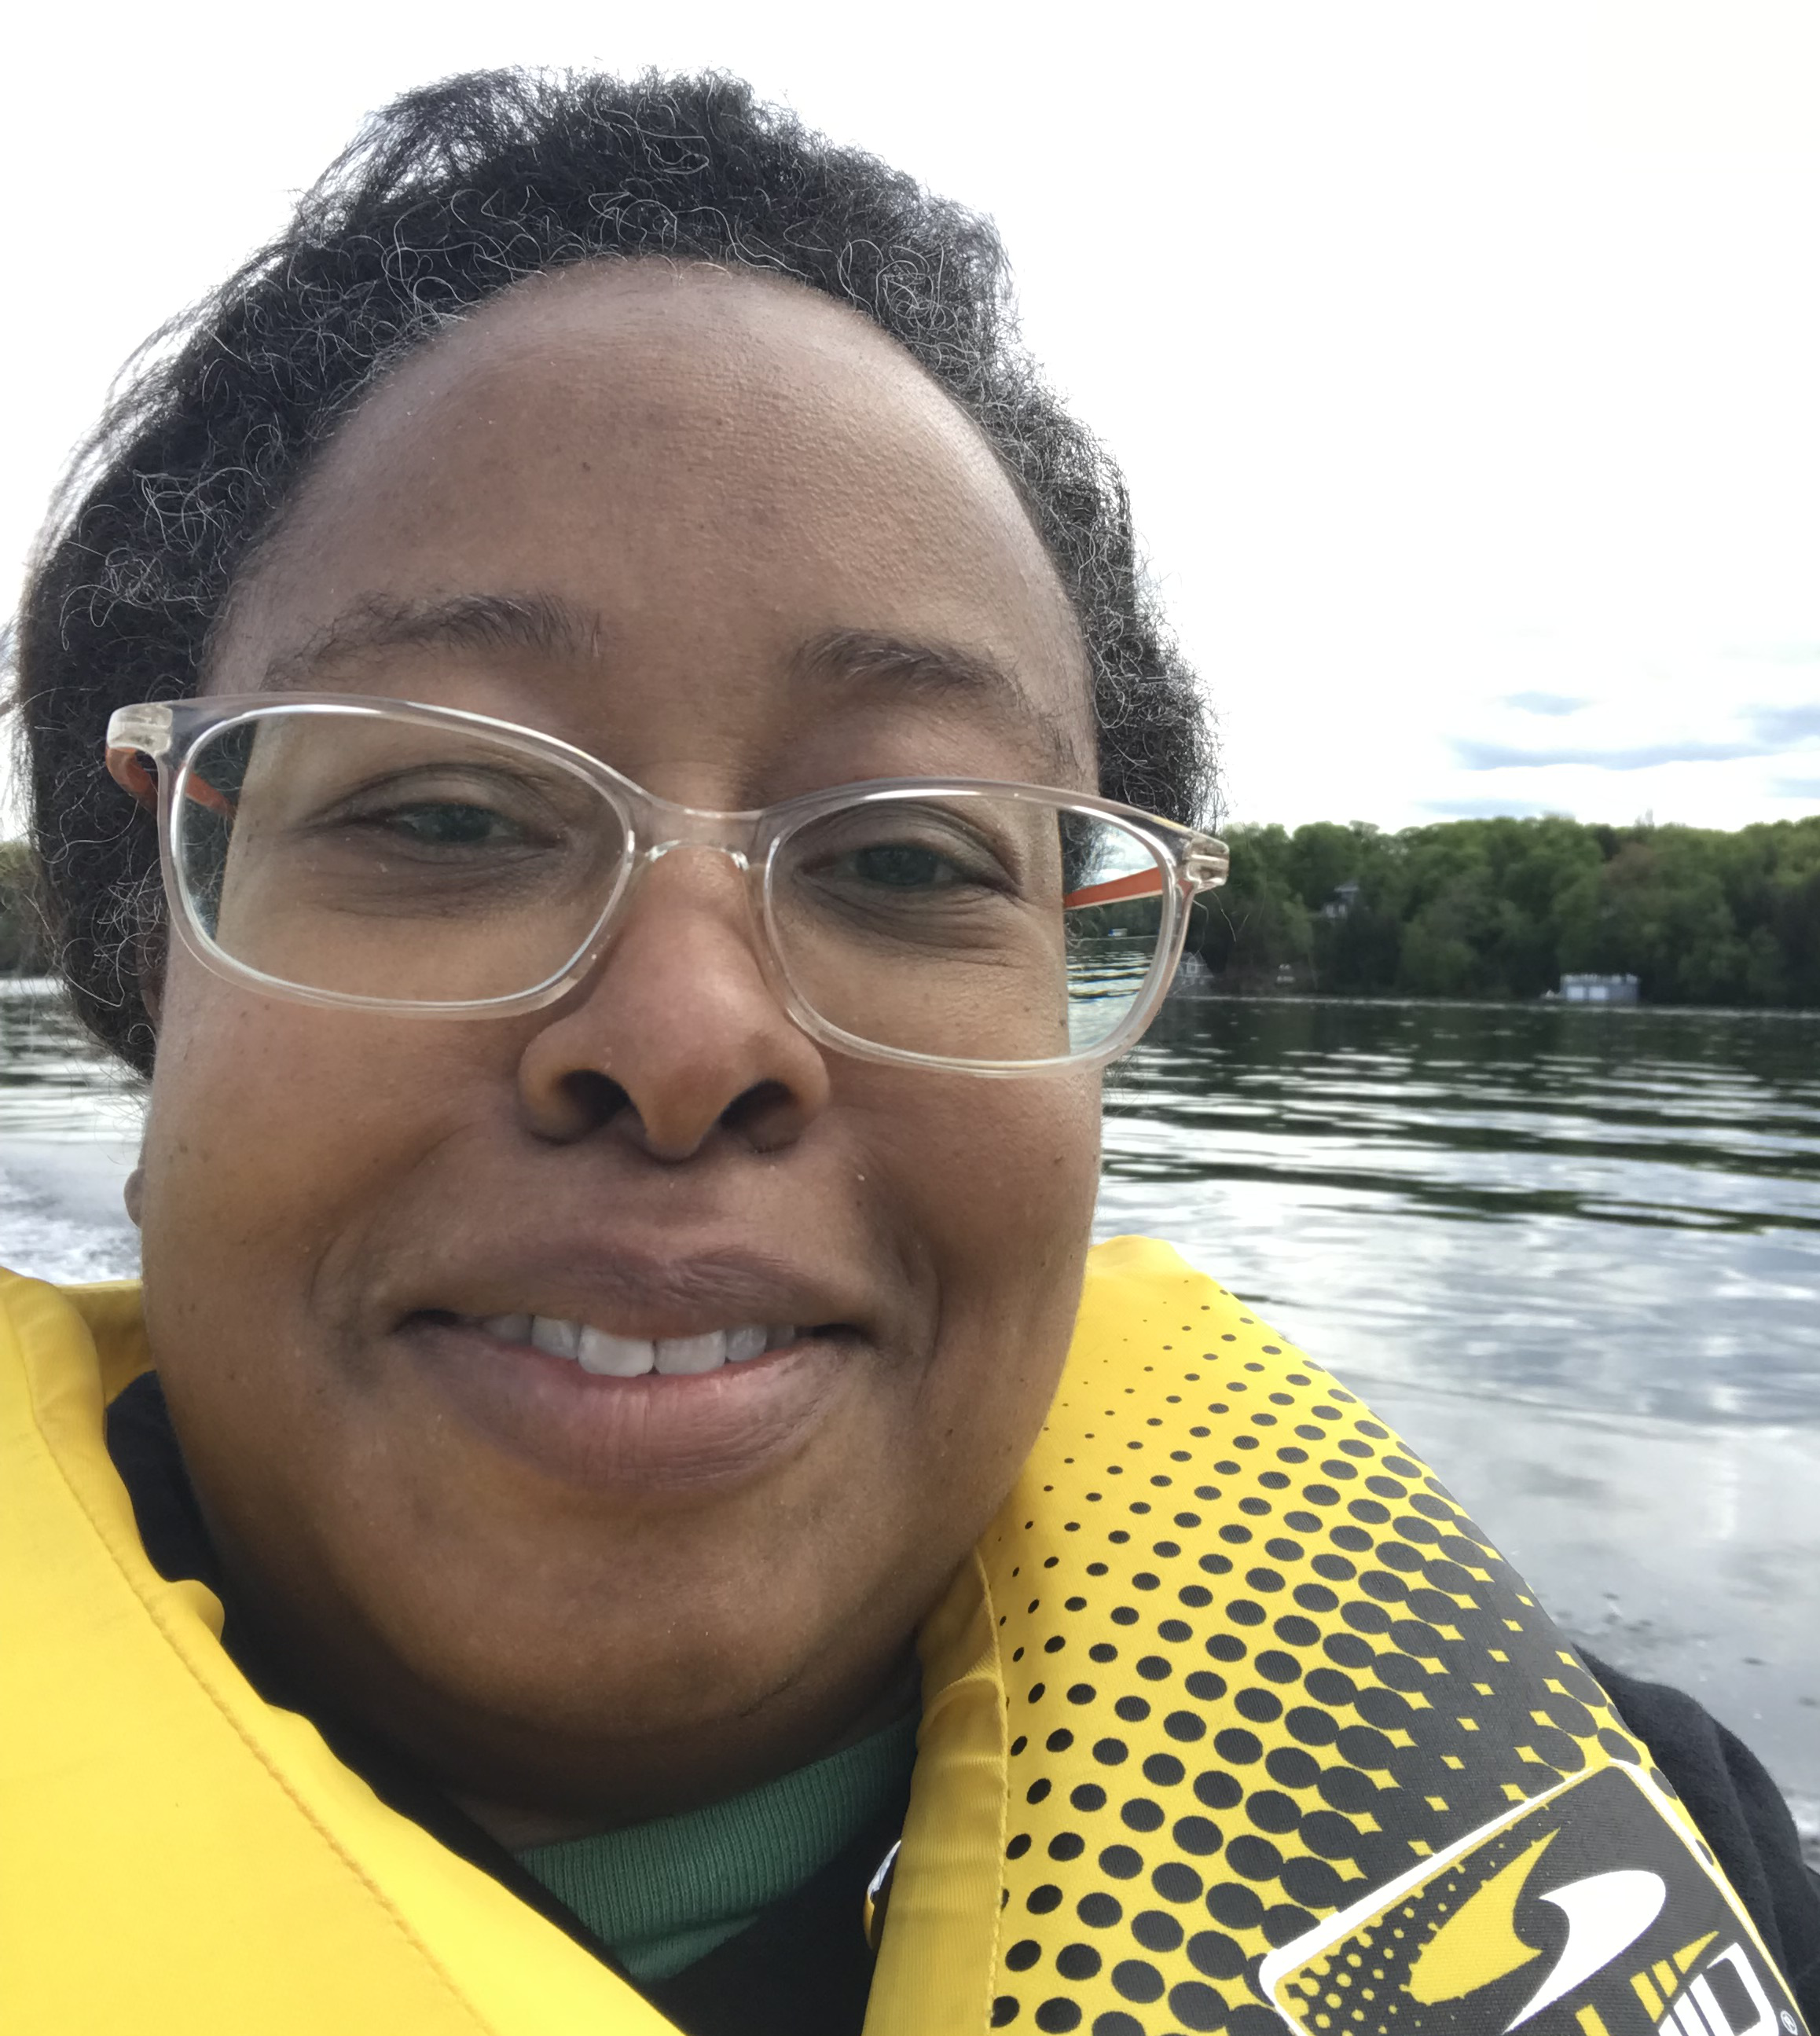 Llonella wears a yellow lifejacket and sits on a boat at CNIB Lake Joe.